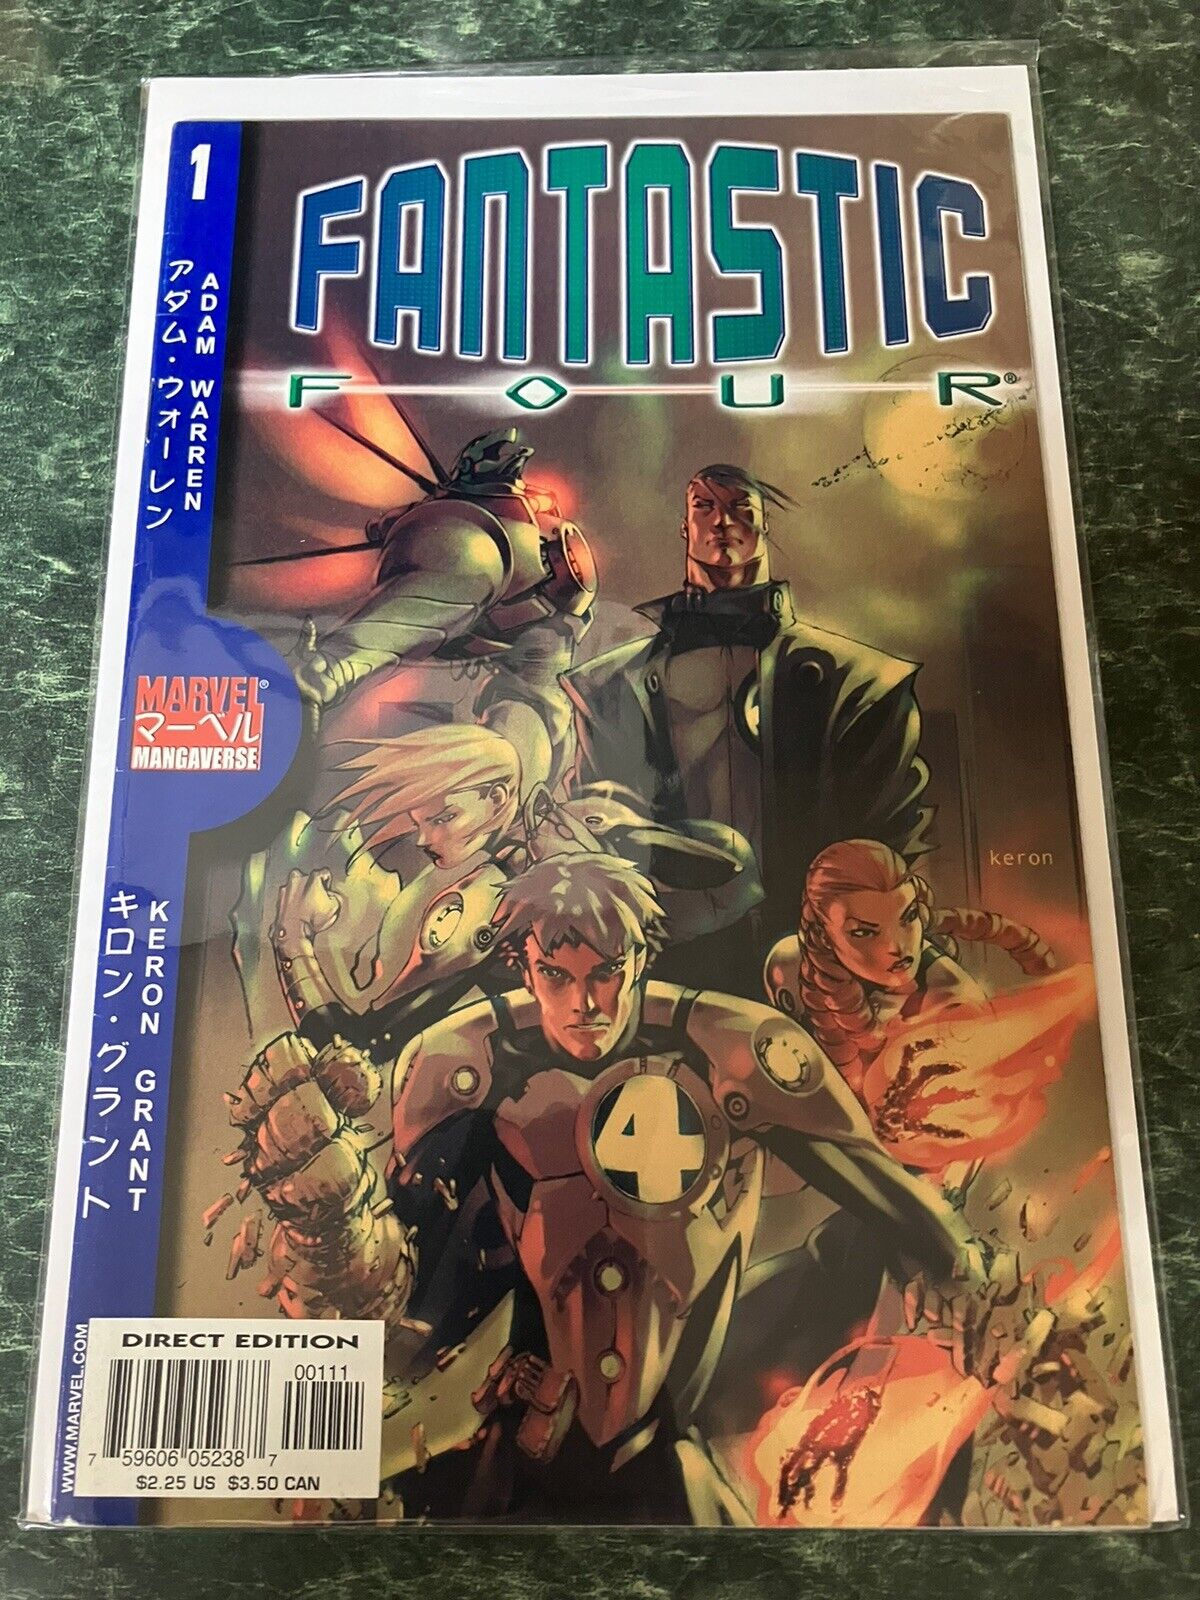 Mangaverse Fantastic Four #1 Direct Edition - Marvel Comic Book (2002) VF-NM